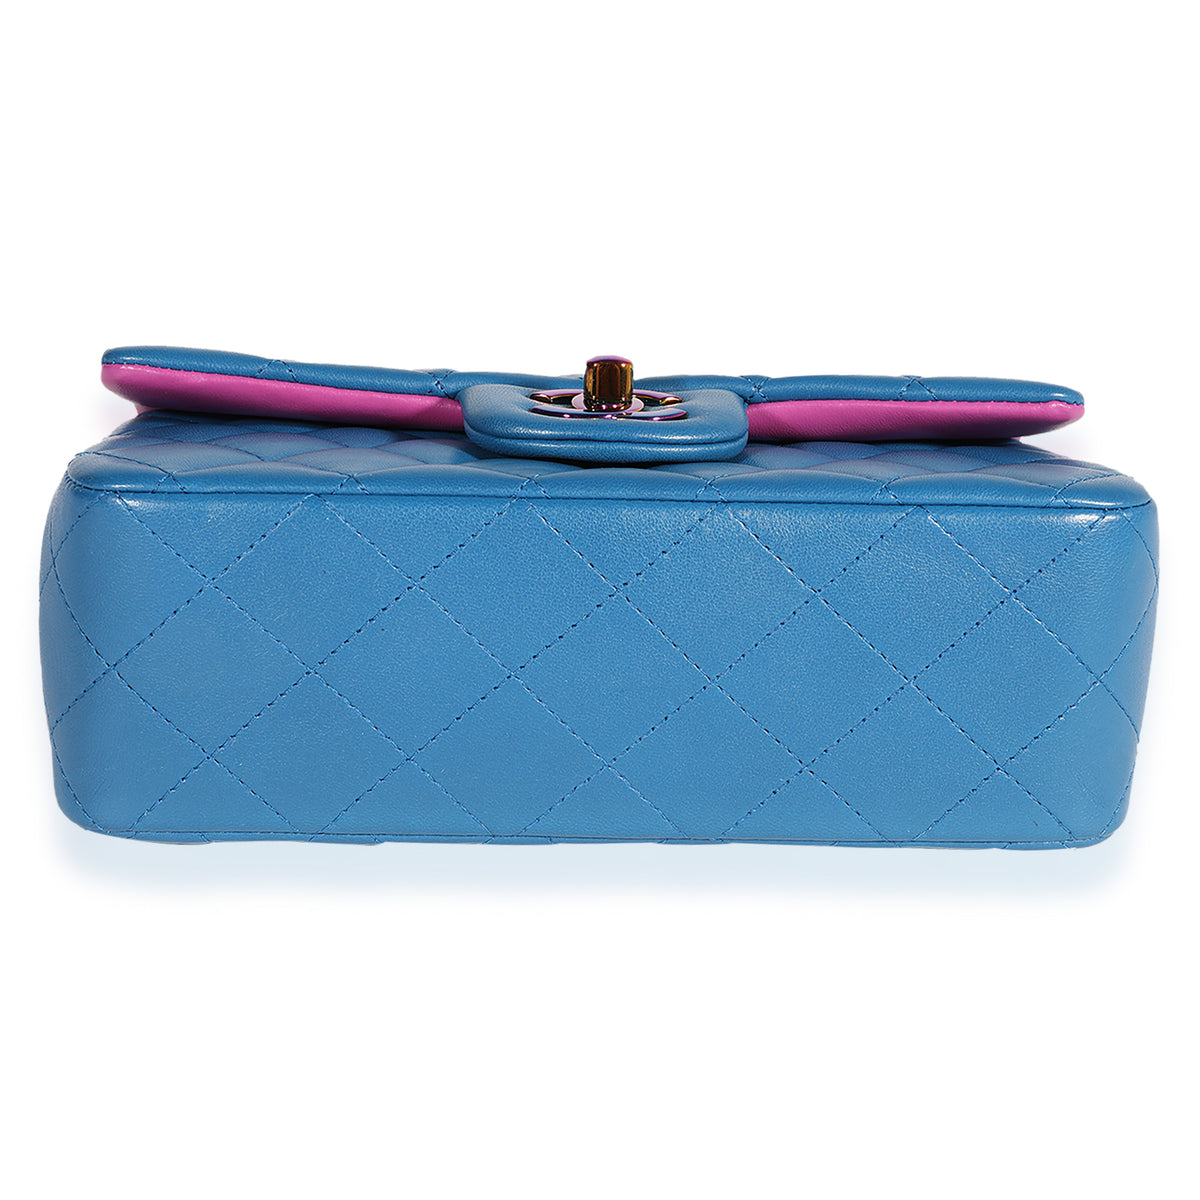 Chanel Blue Quilted Lambskin Rectangular Mini Classic Flap Bag